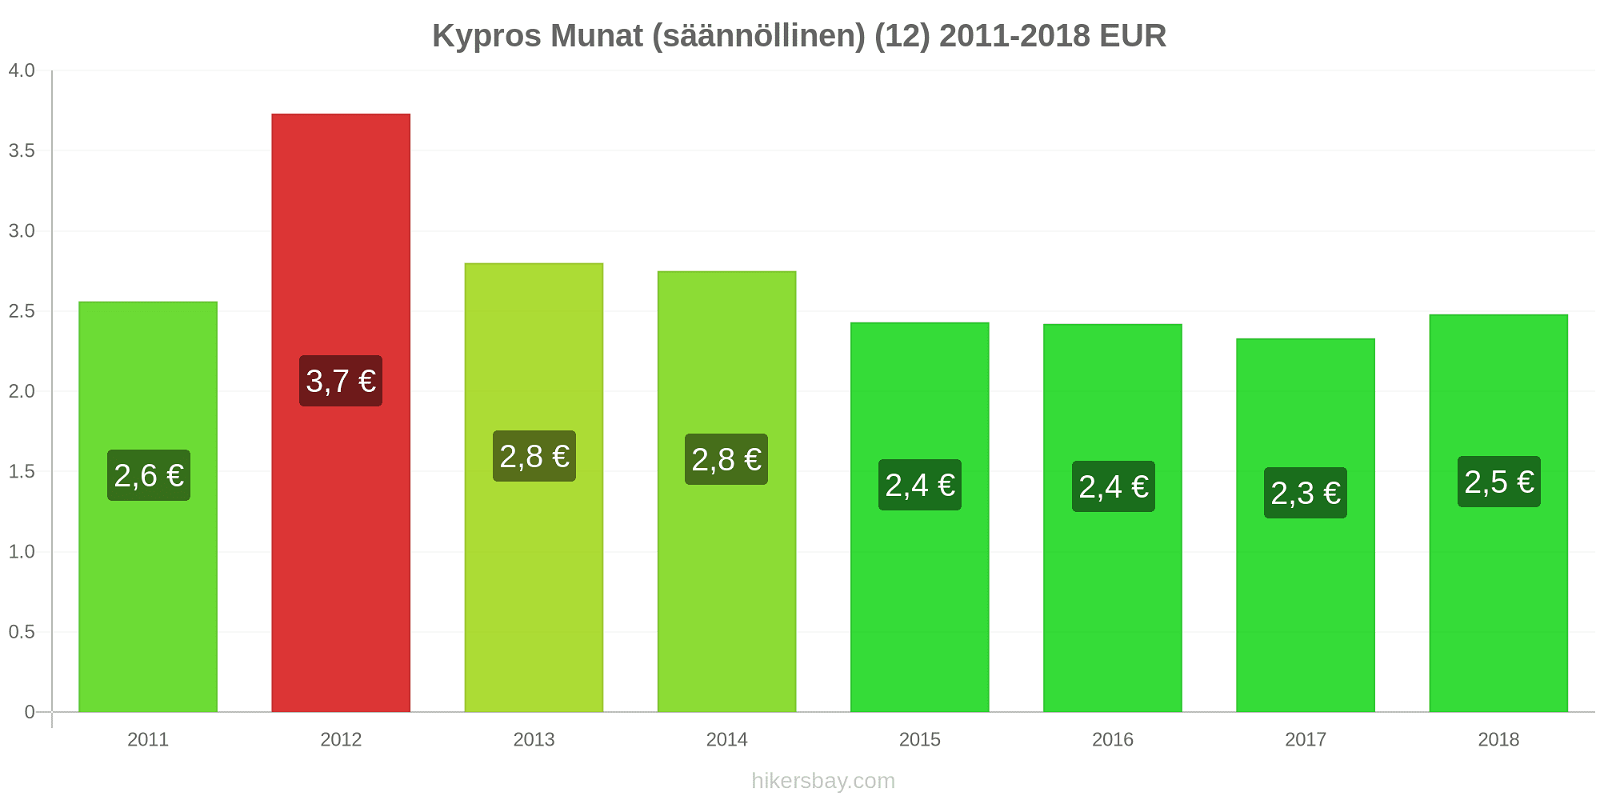 Kypros hintojen muutokset Munat (tavalliset) (12) hikersbay.com